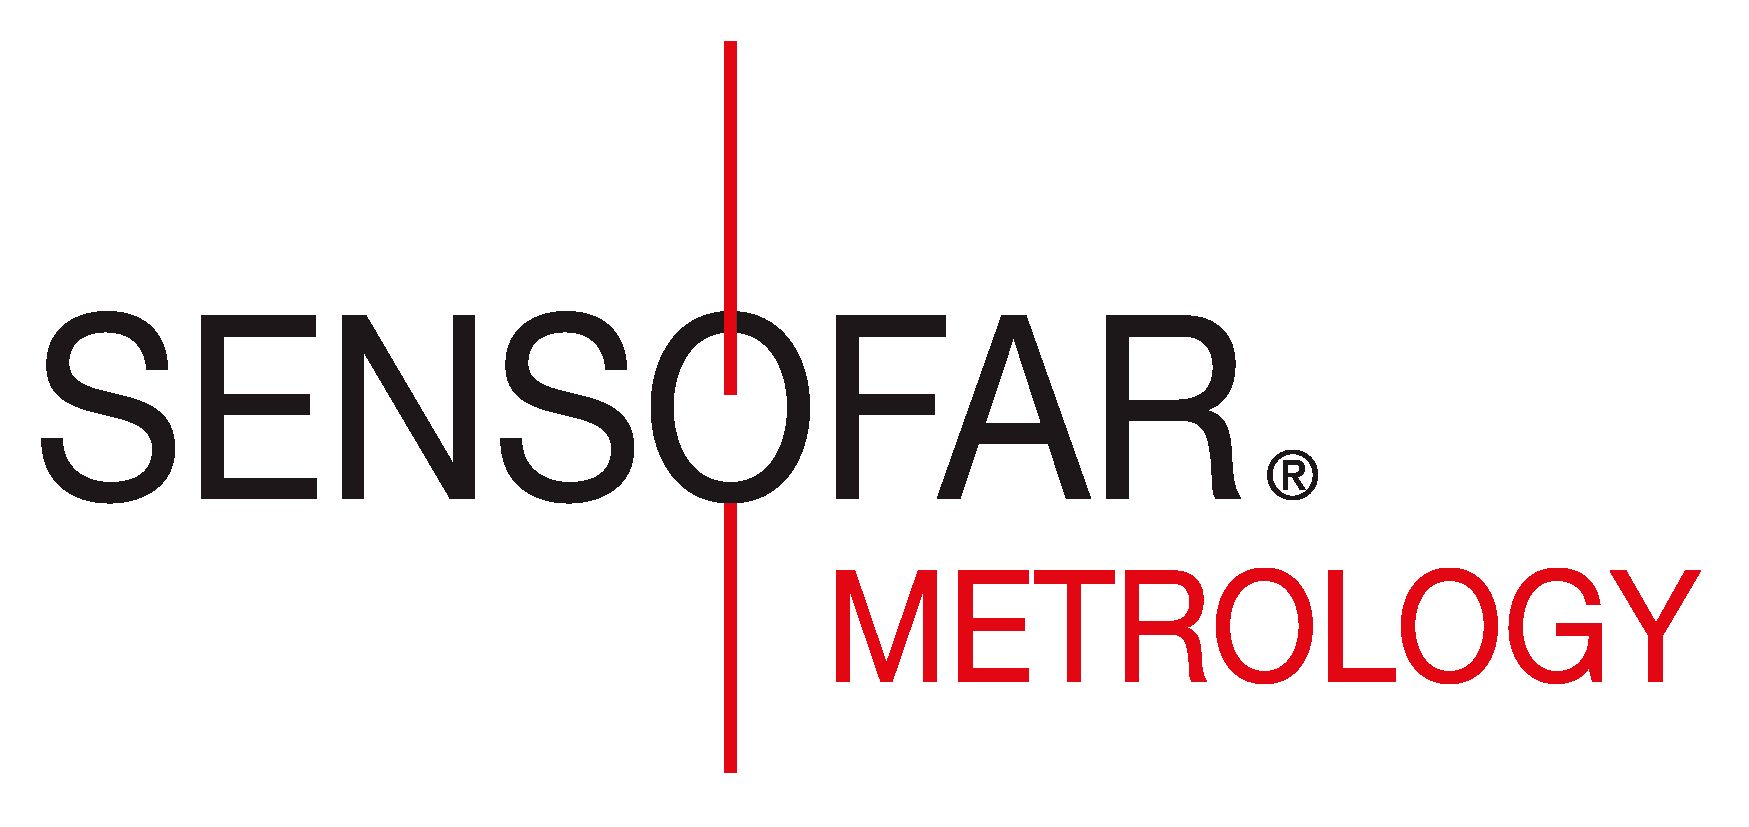 Sensofar Metrology Brand